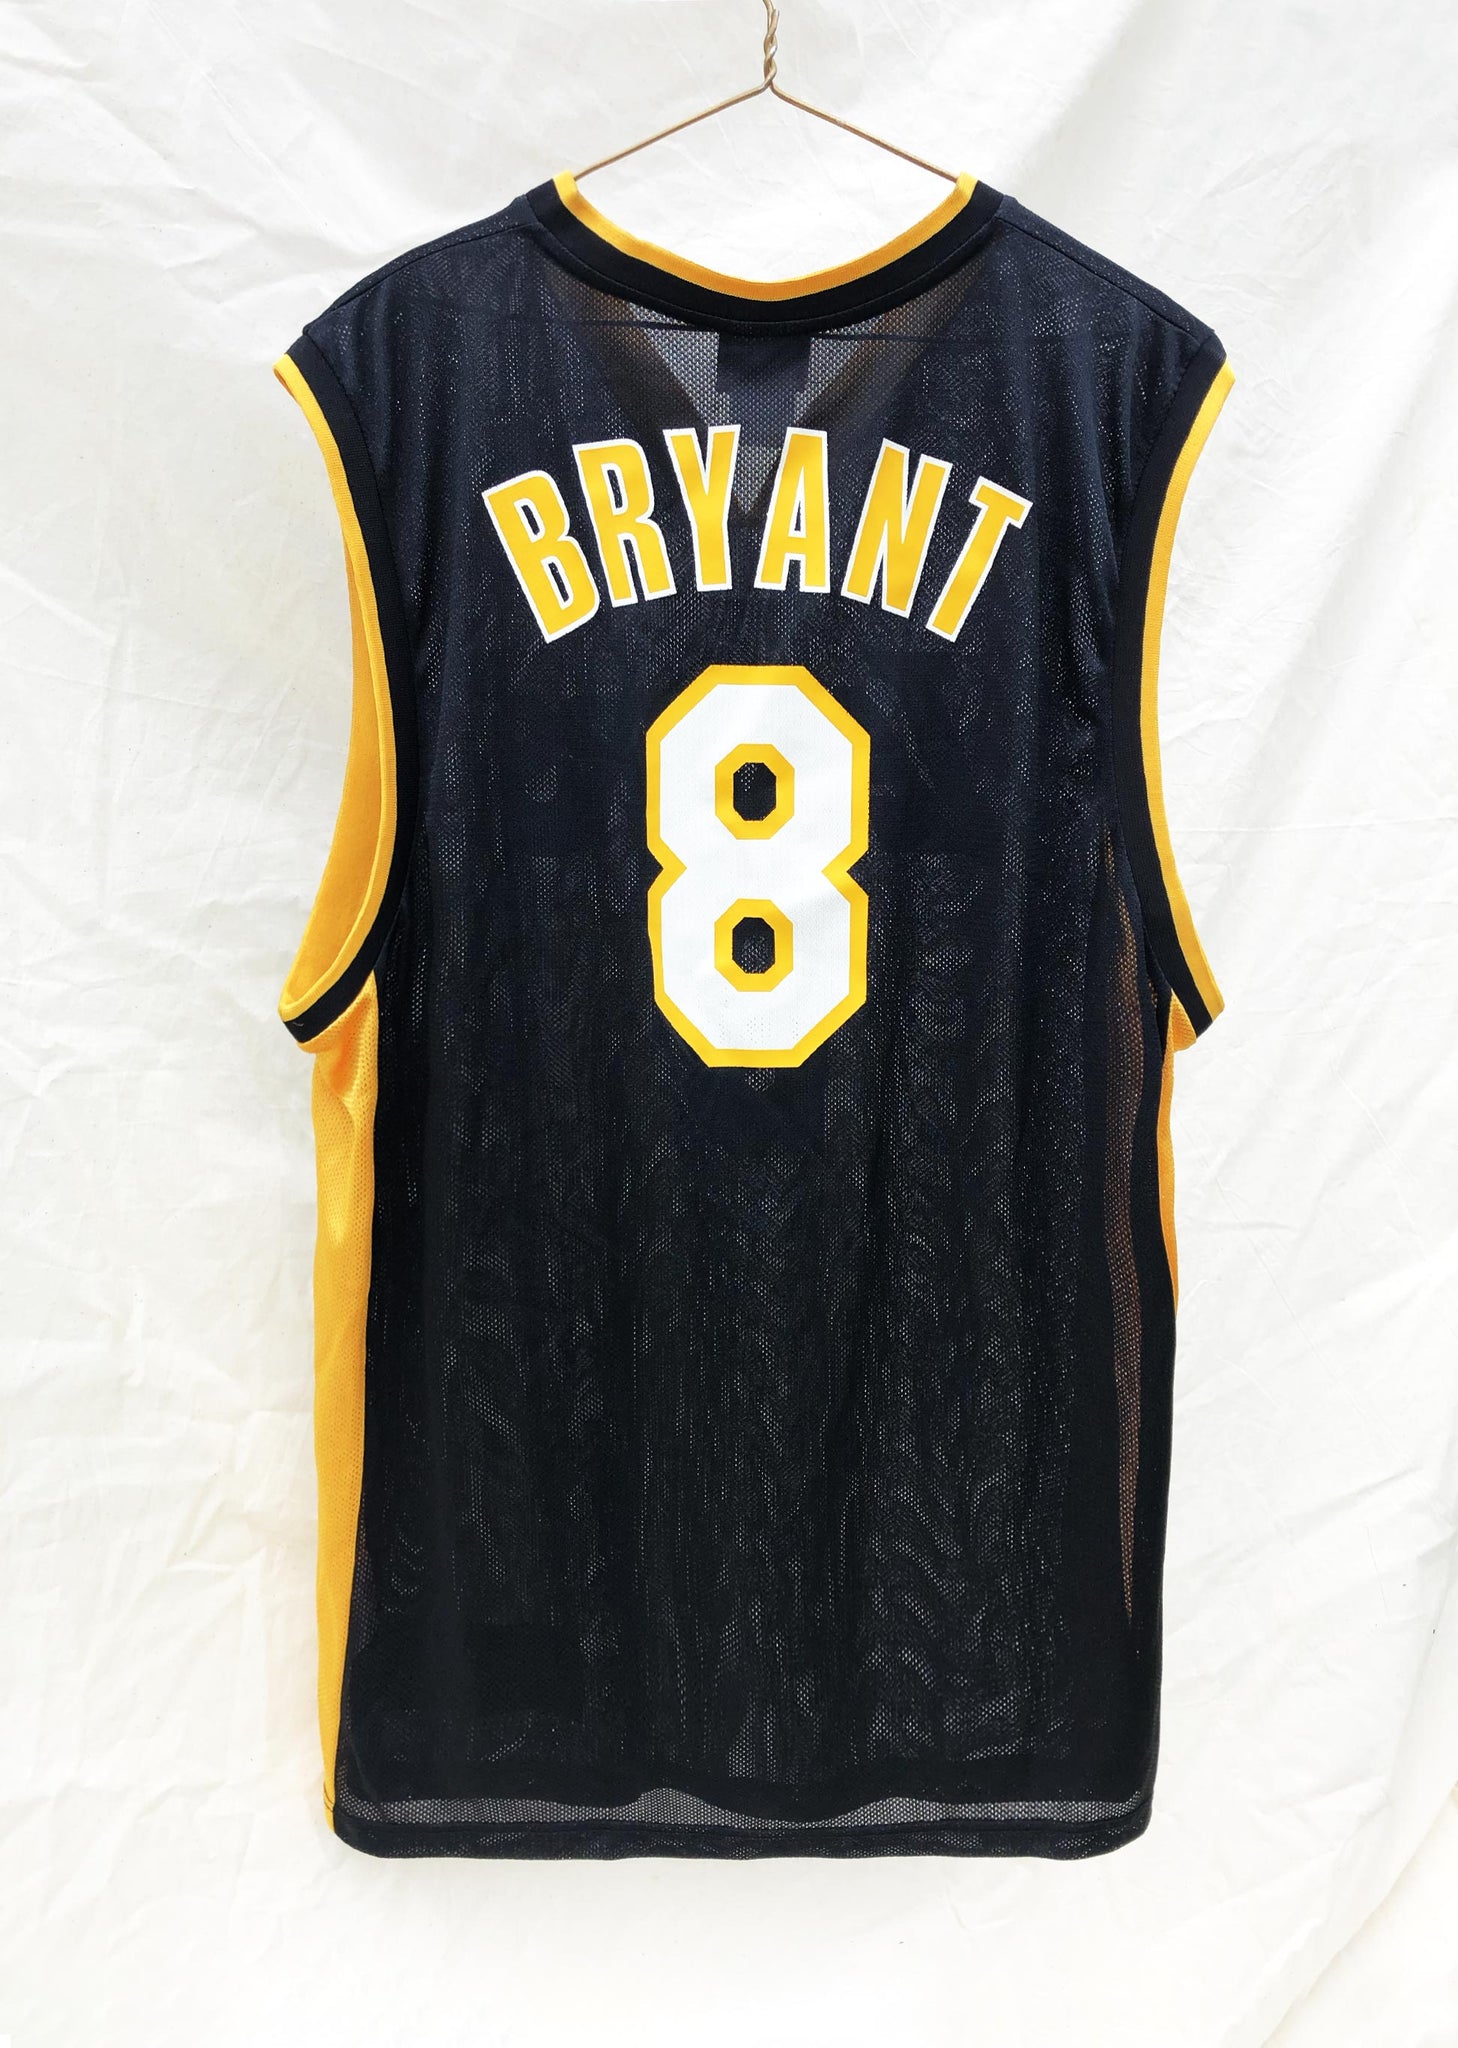 Kobe Bryant 8 Black Mamba Rucker Park Basketball Jersey